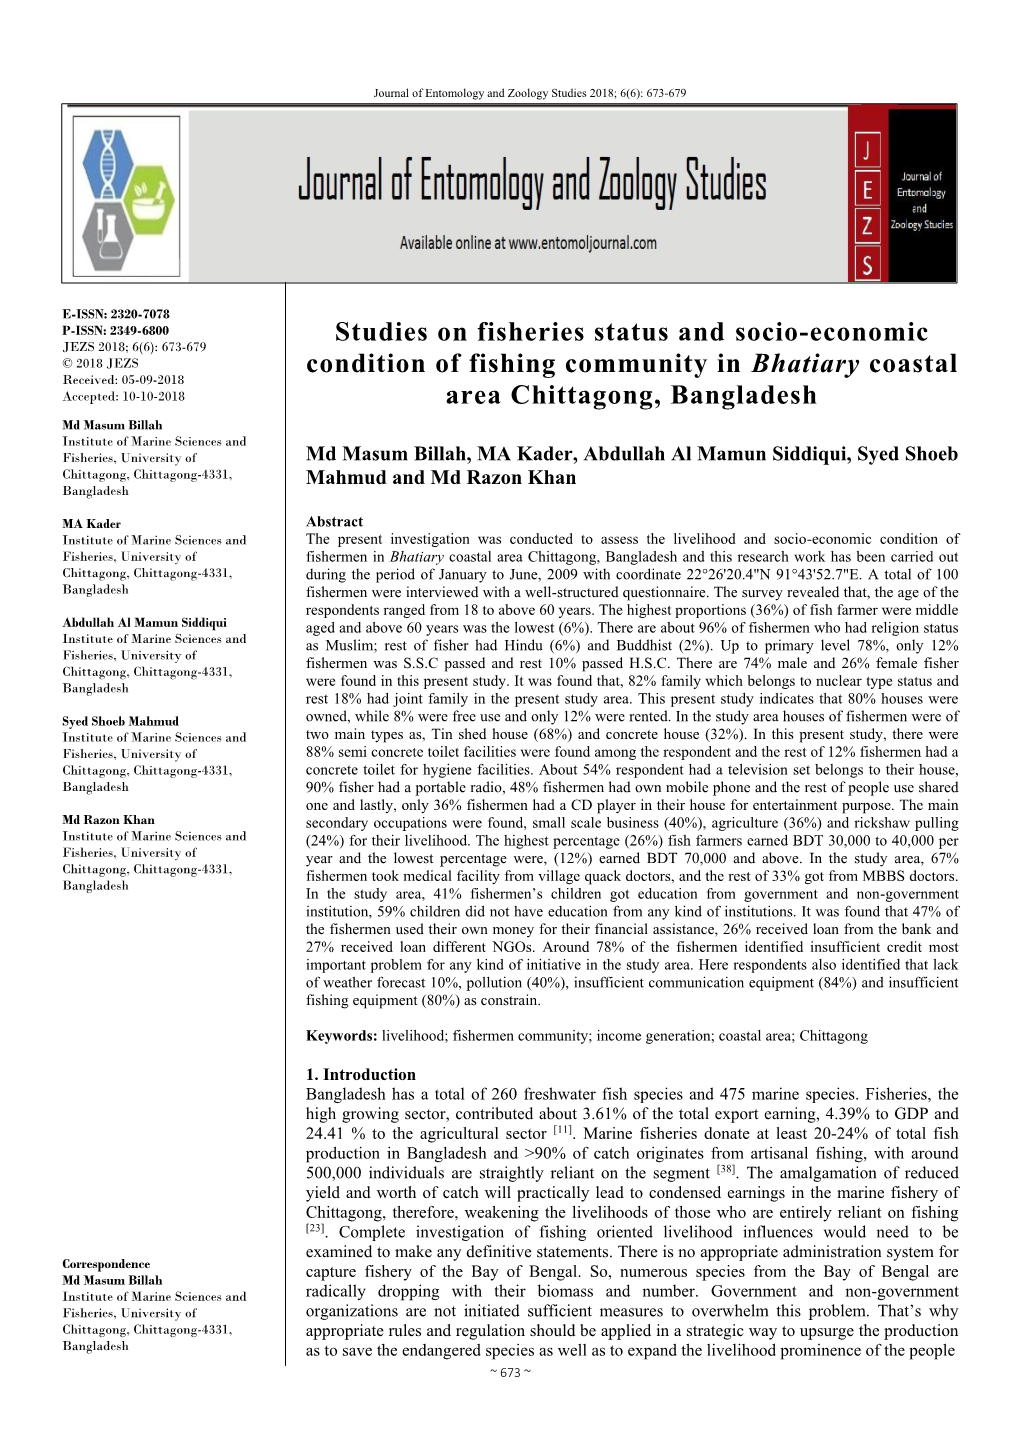 Studies on Fisheries Status and Socio-Economic Condition of Fishing